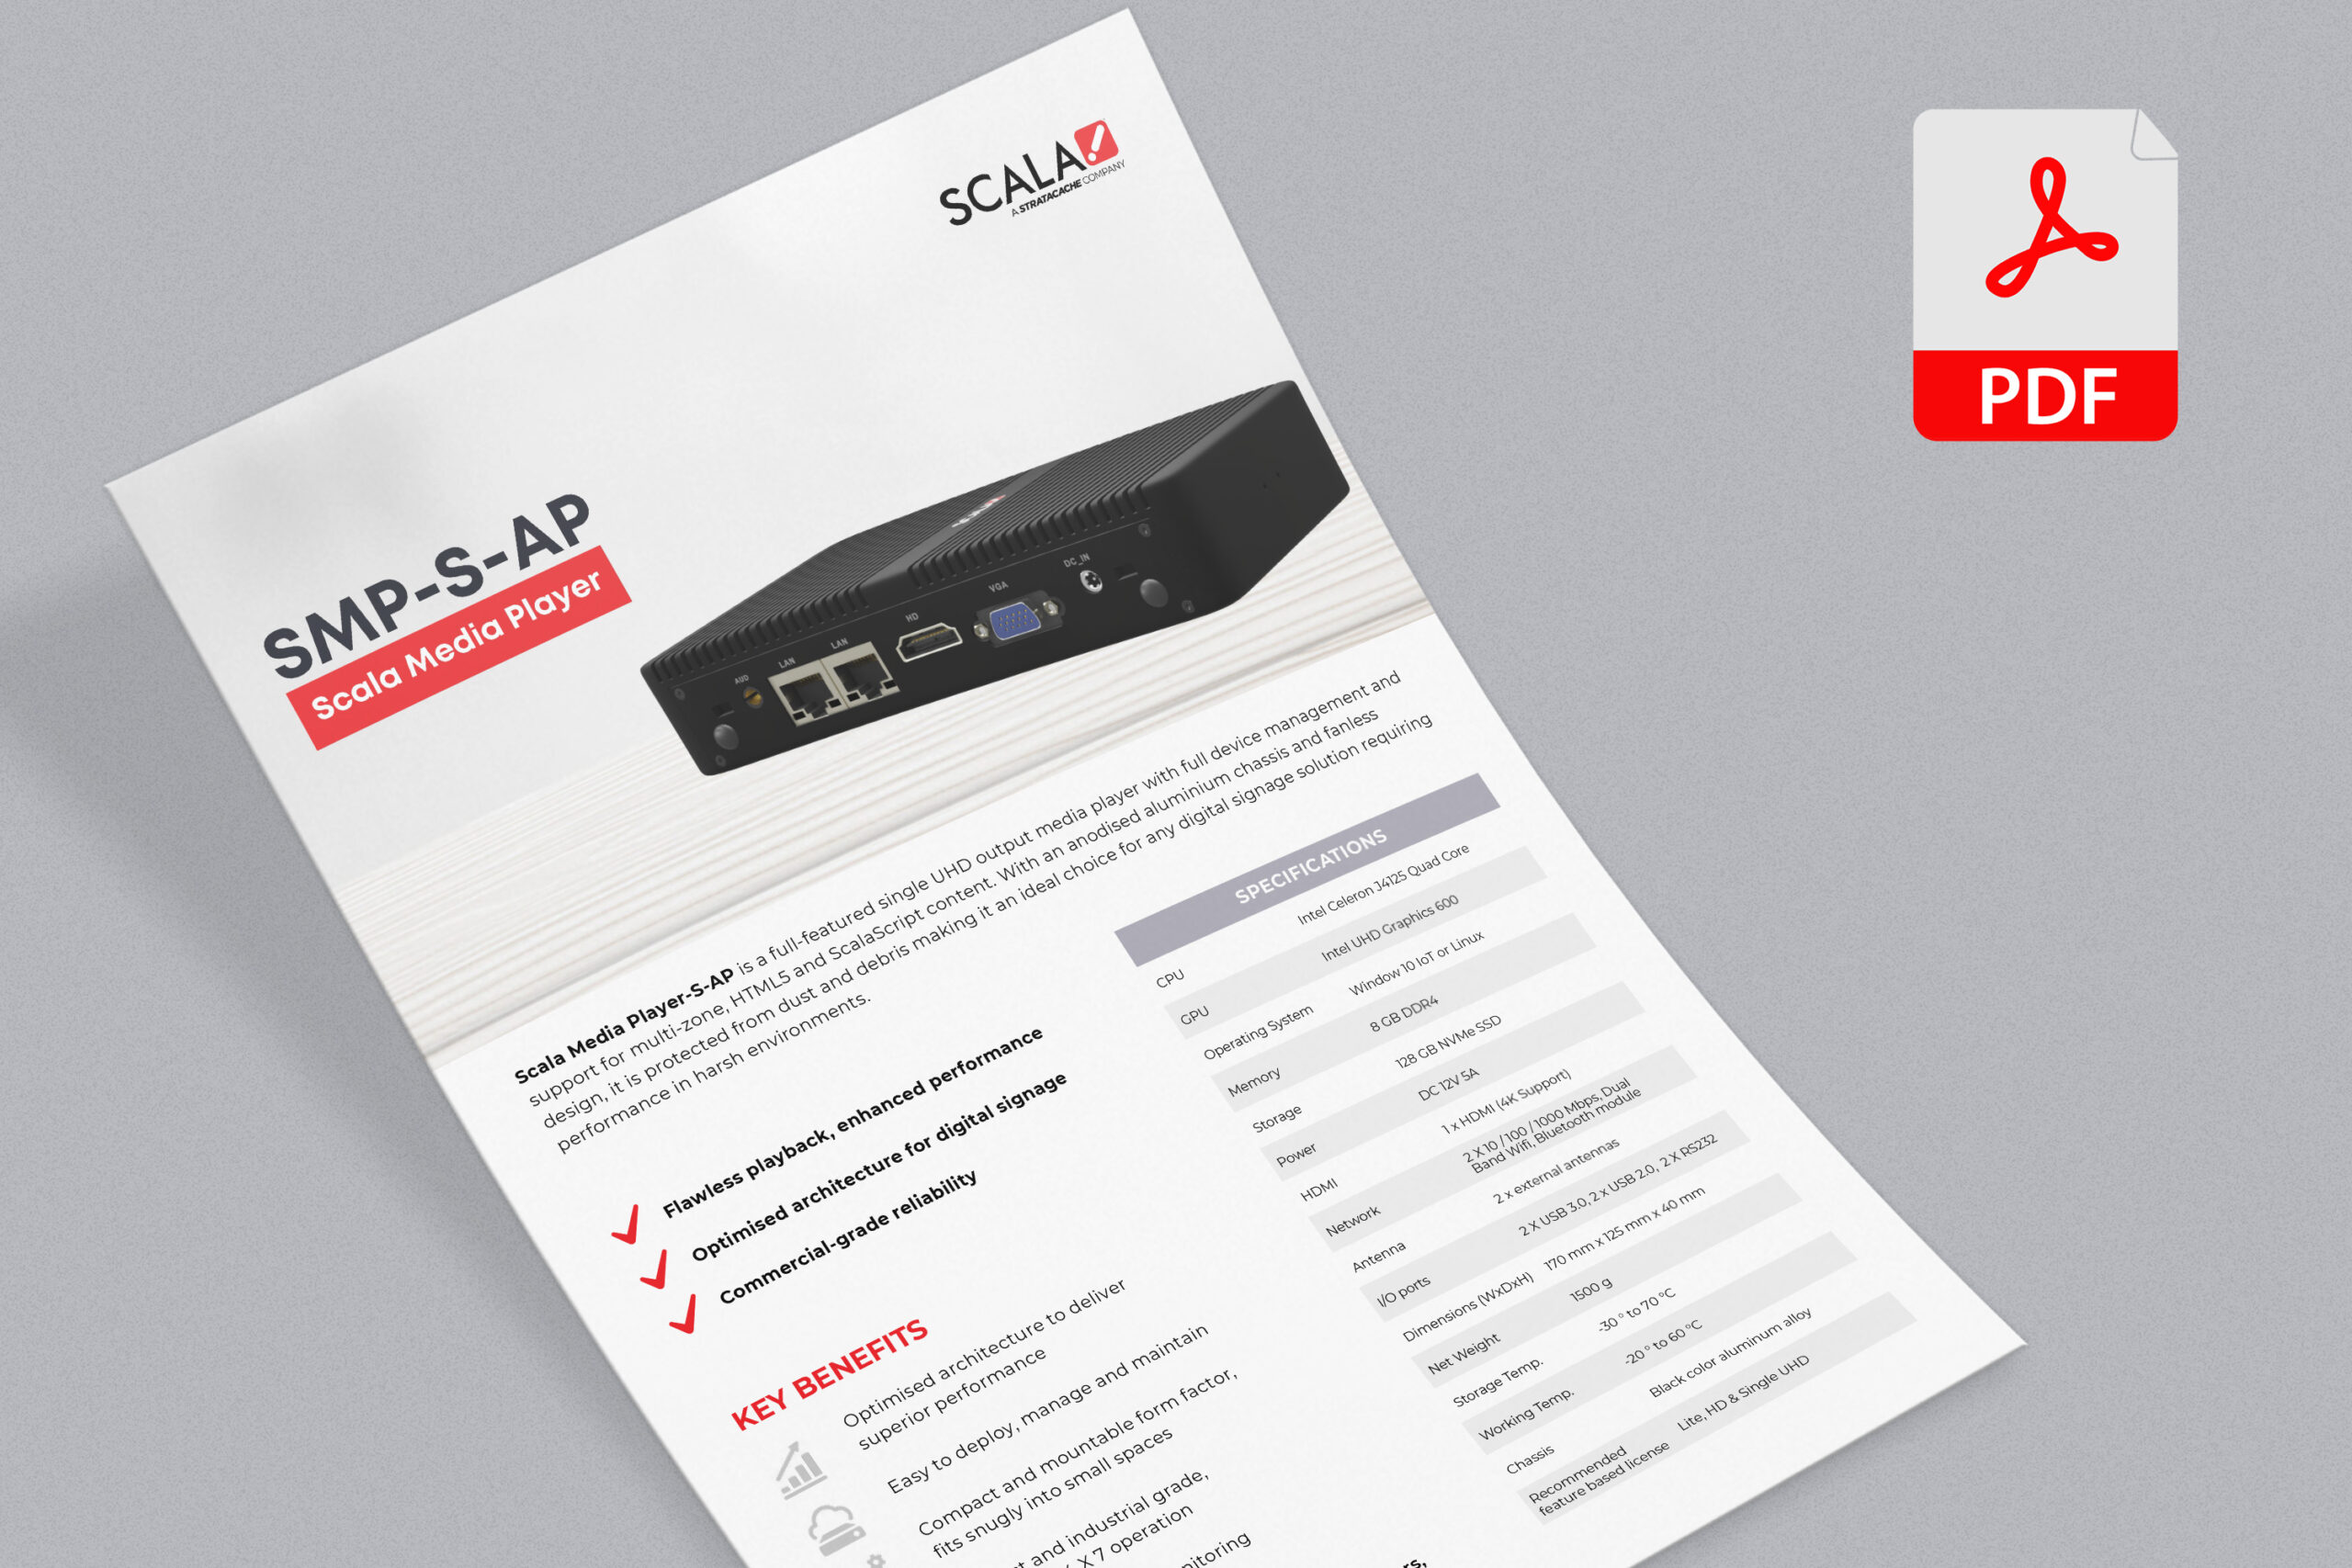 Scala Media Player S-AP - Download Brochure